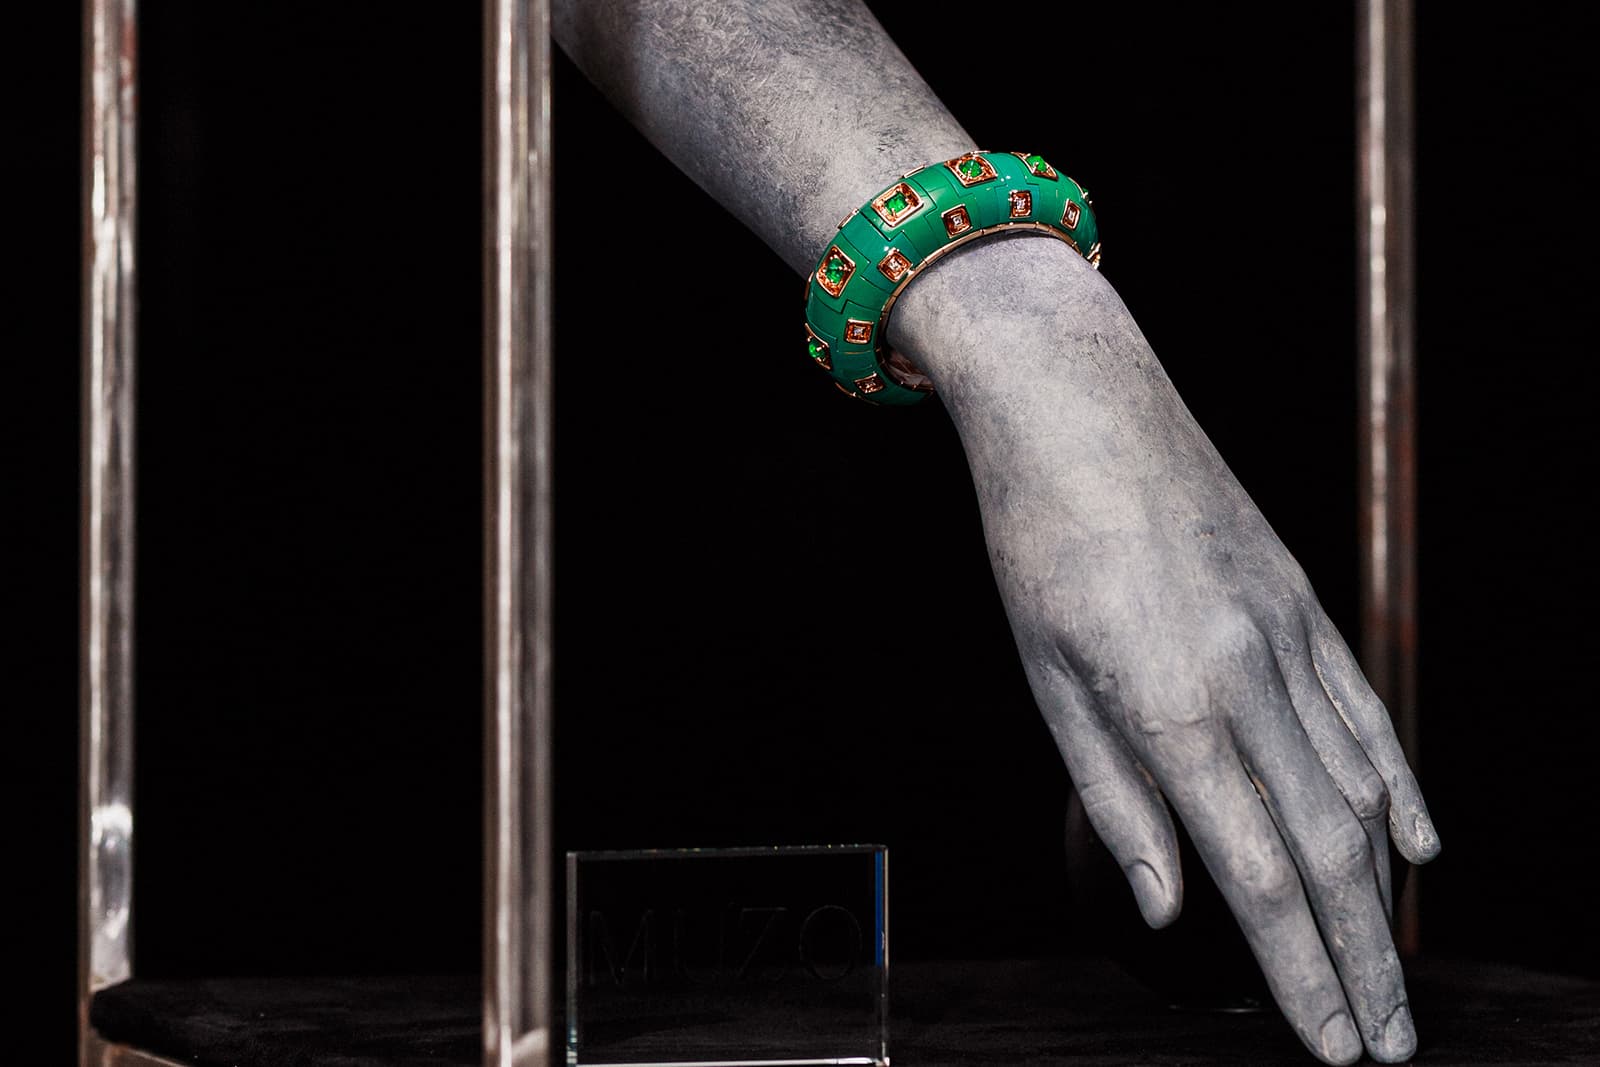 The Wilfredo Rosado Tribu bracelet with green nano-ceramic detail and 5.85 carats of Muzo Colombian emeralds